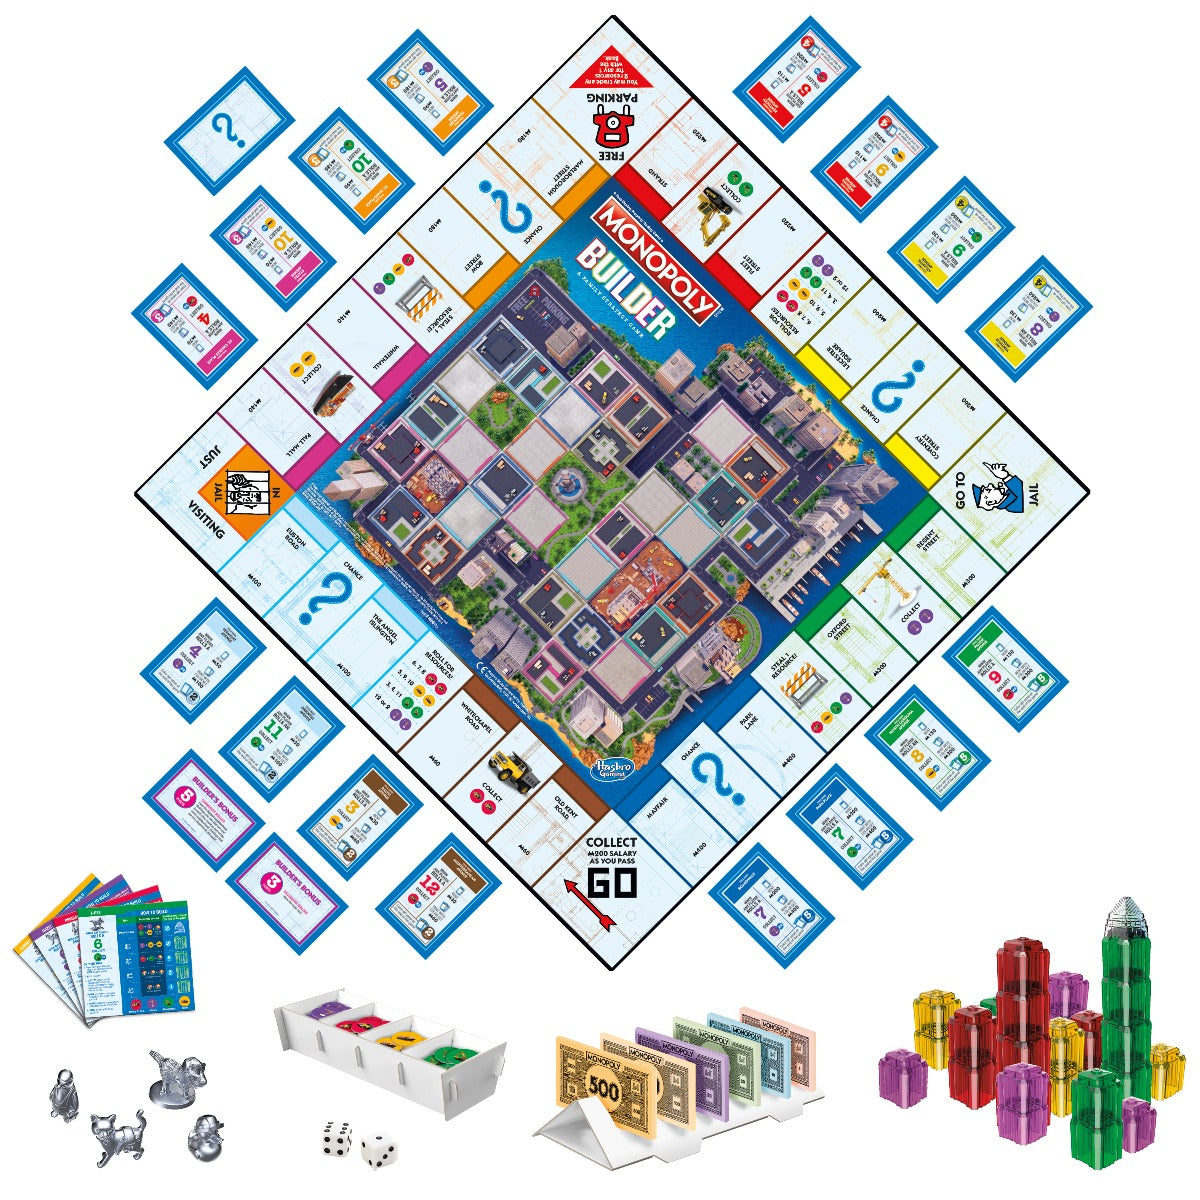 Cờ tỷ phú Monopoly Builder MONOPOLY F1696